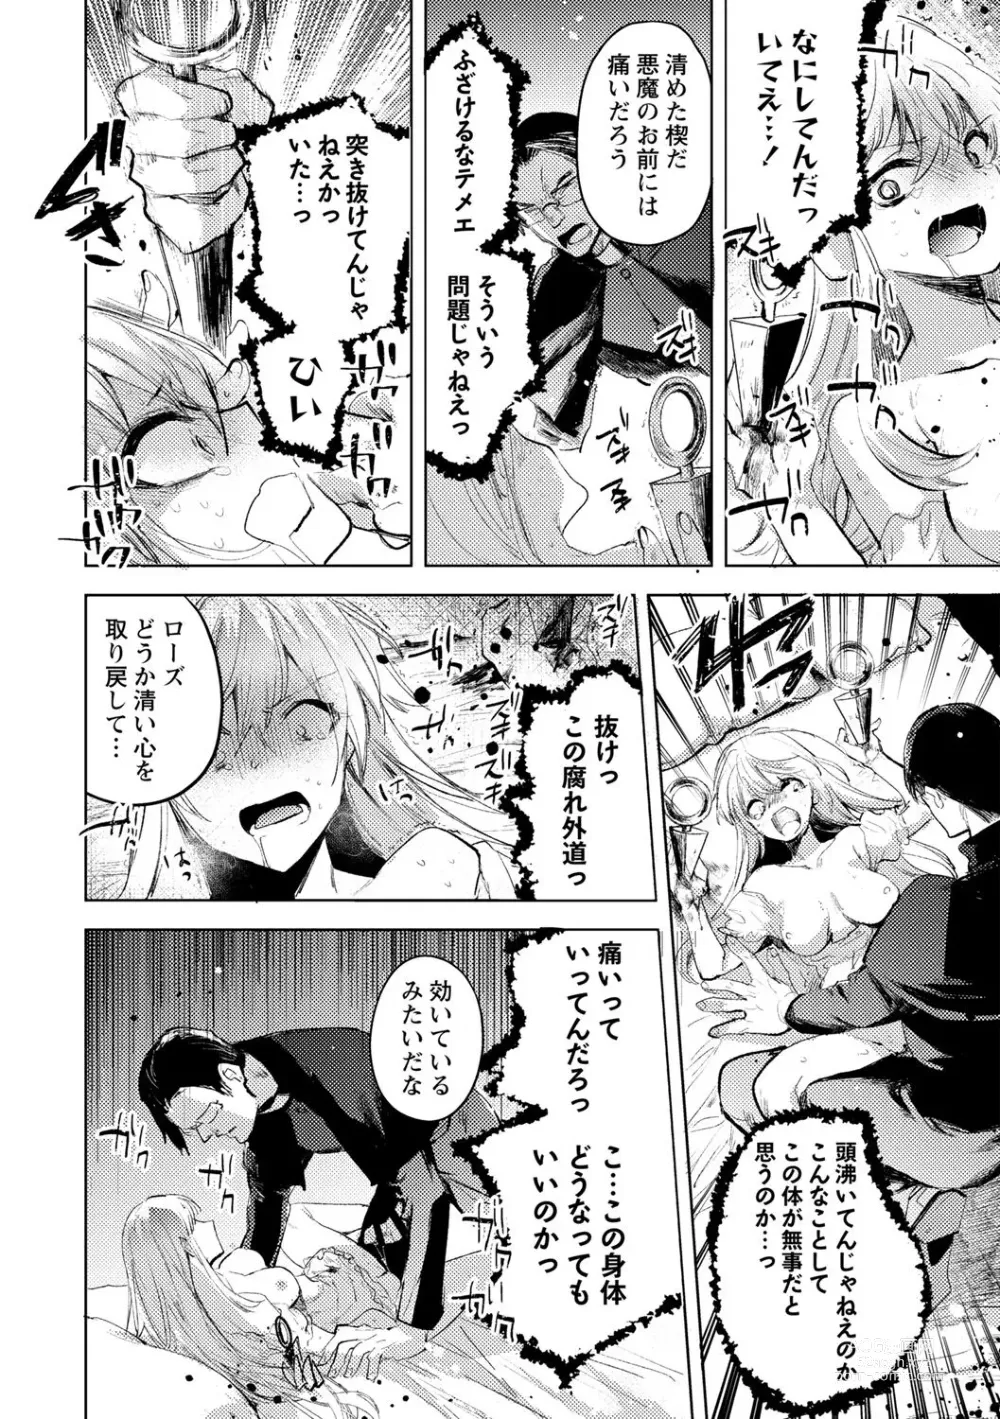 Page 6 of manga Akuma no Harai-kata